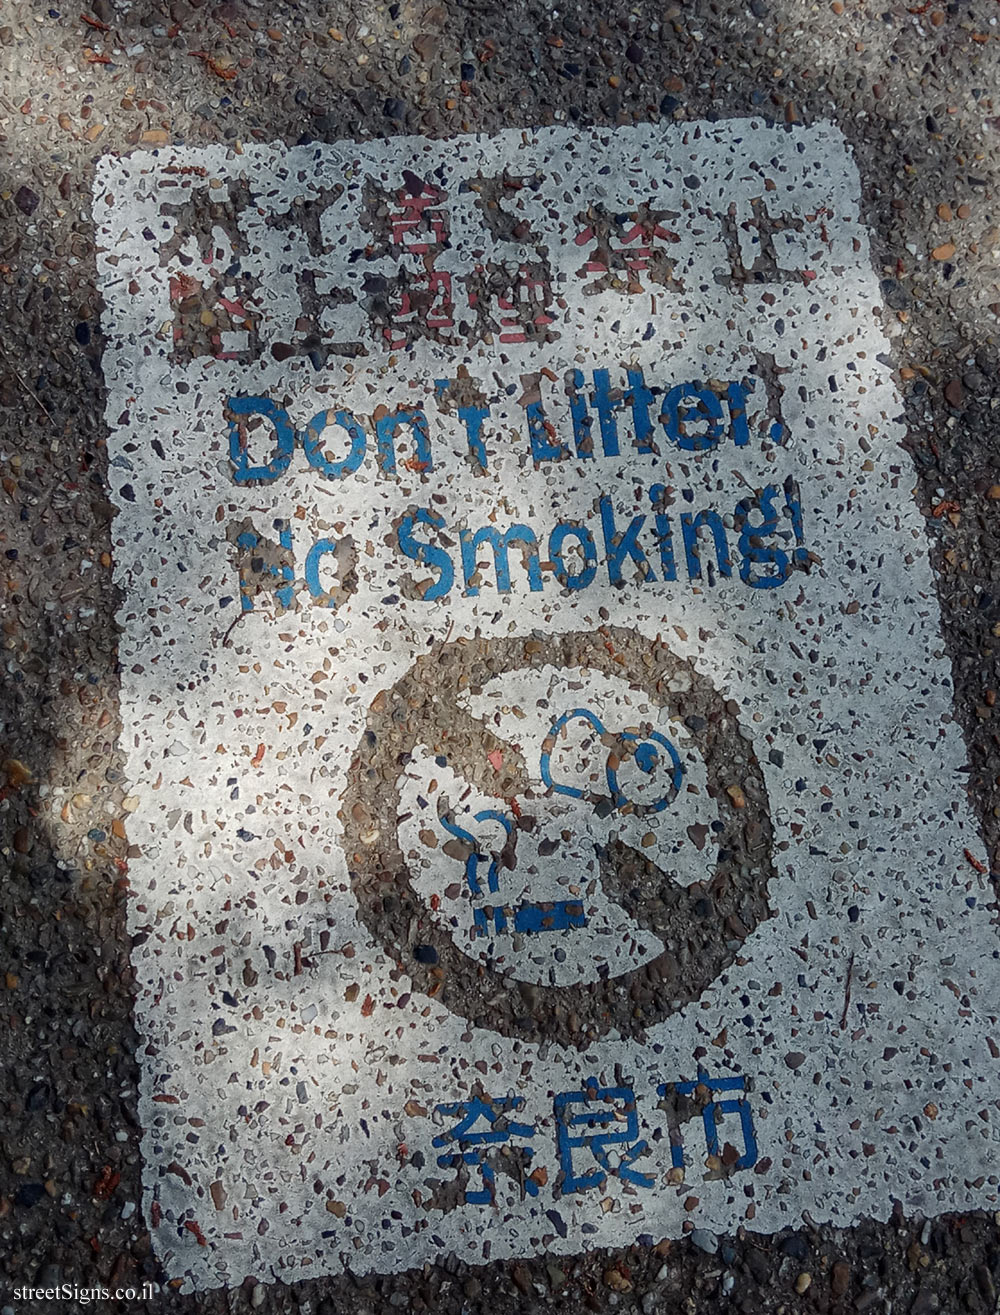 Nara - Don’t litter, no smoking